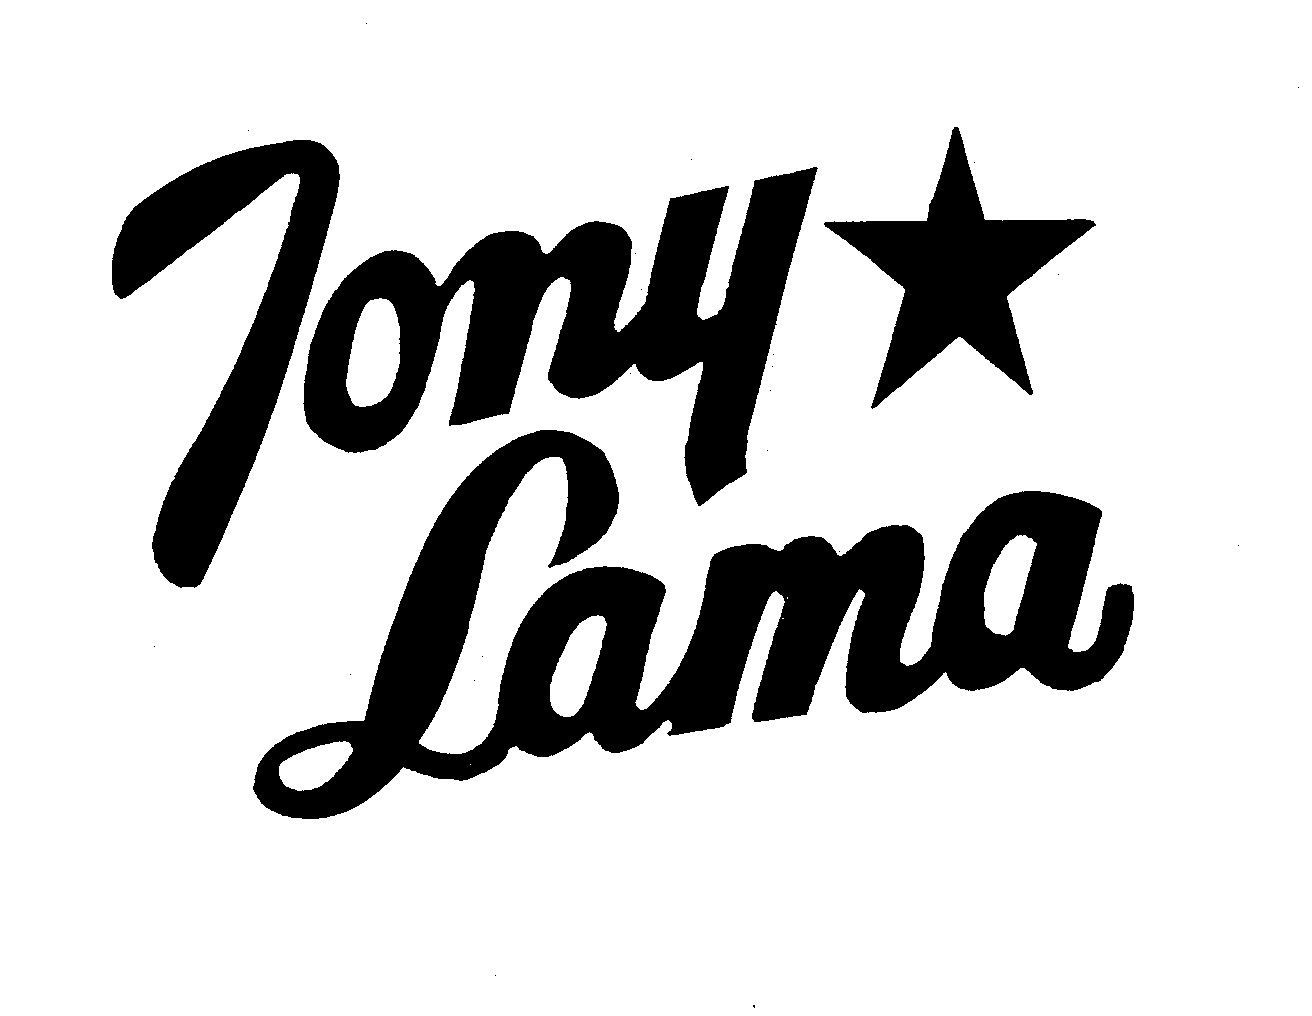 TONY LAMA